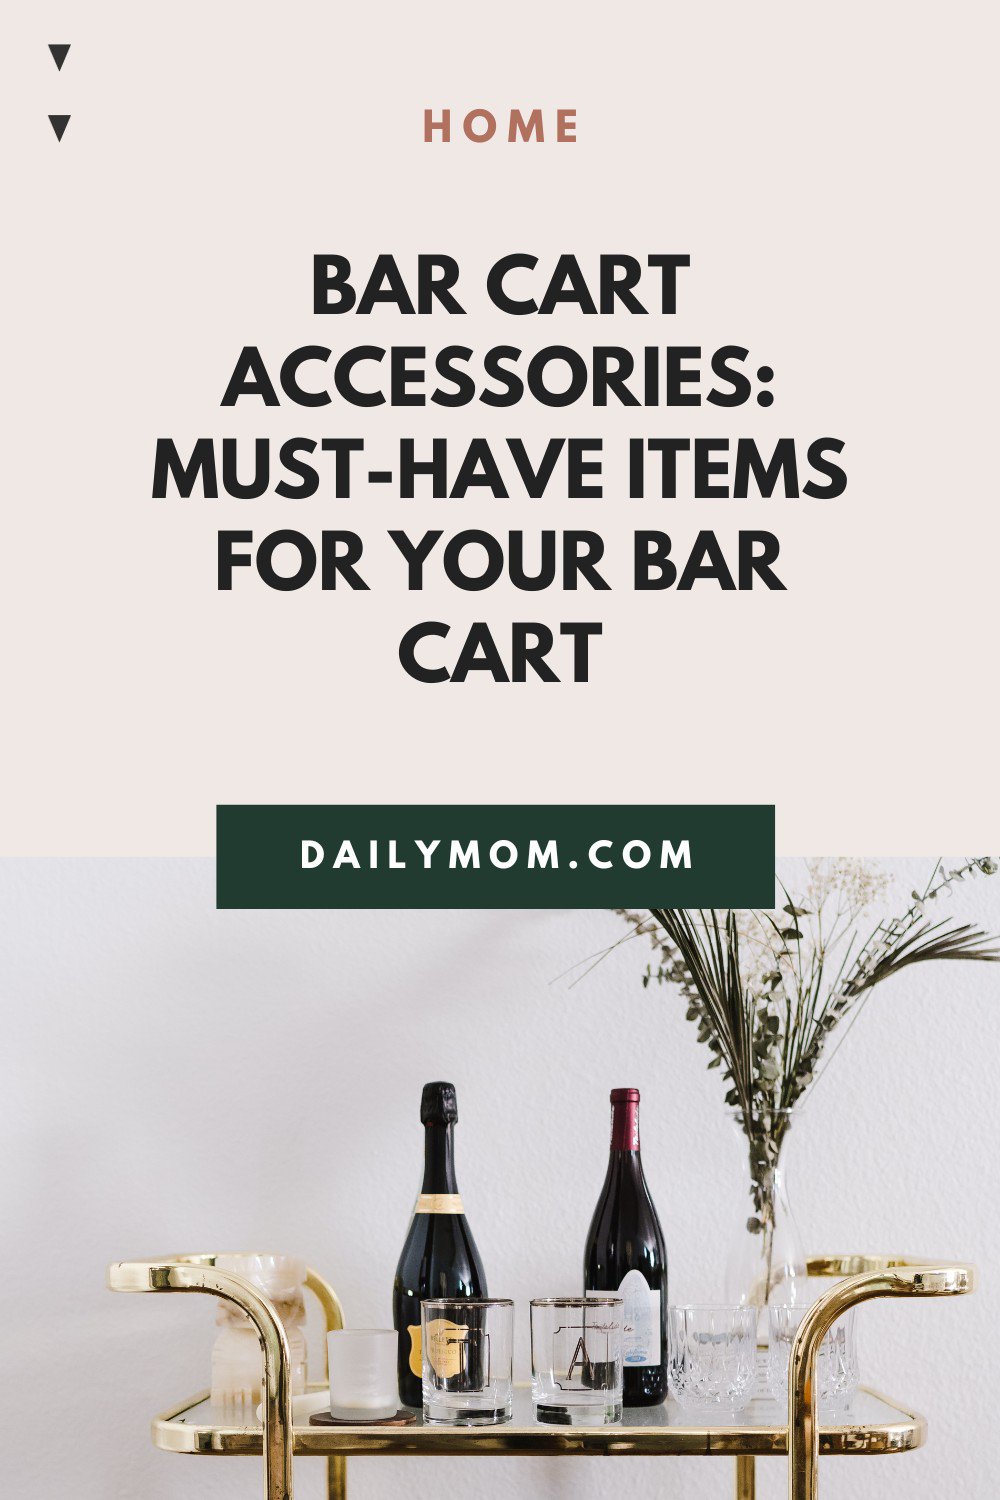 Daily Mom Parent Portal Bar Cart Accessories 